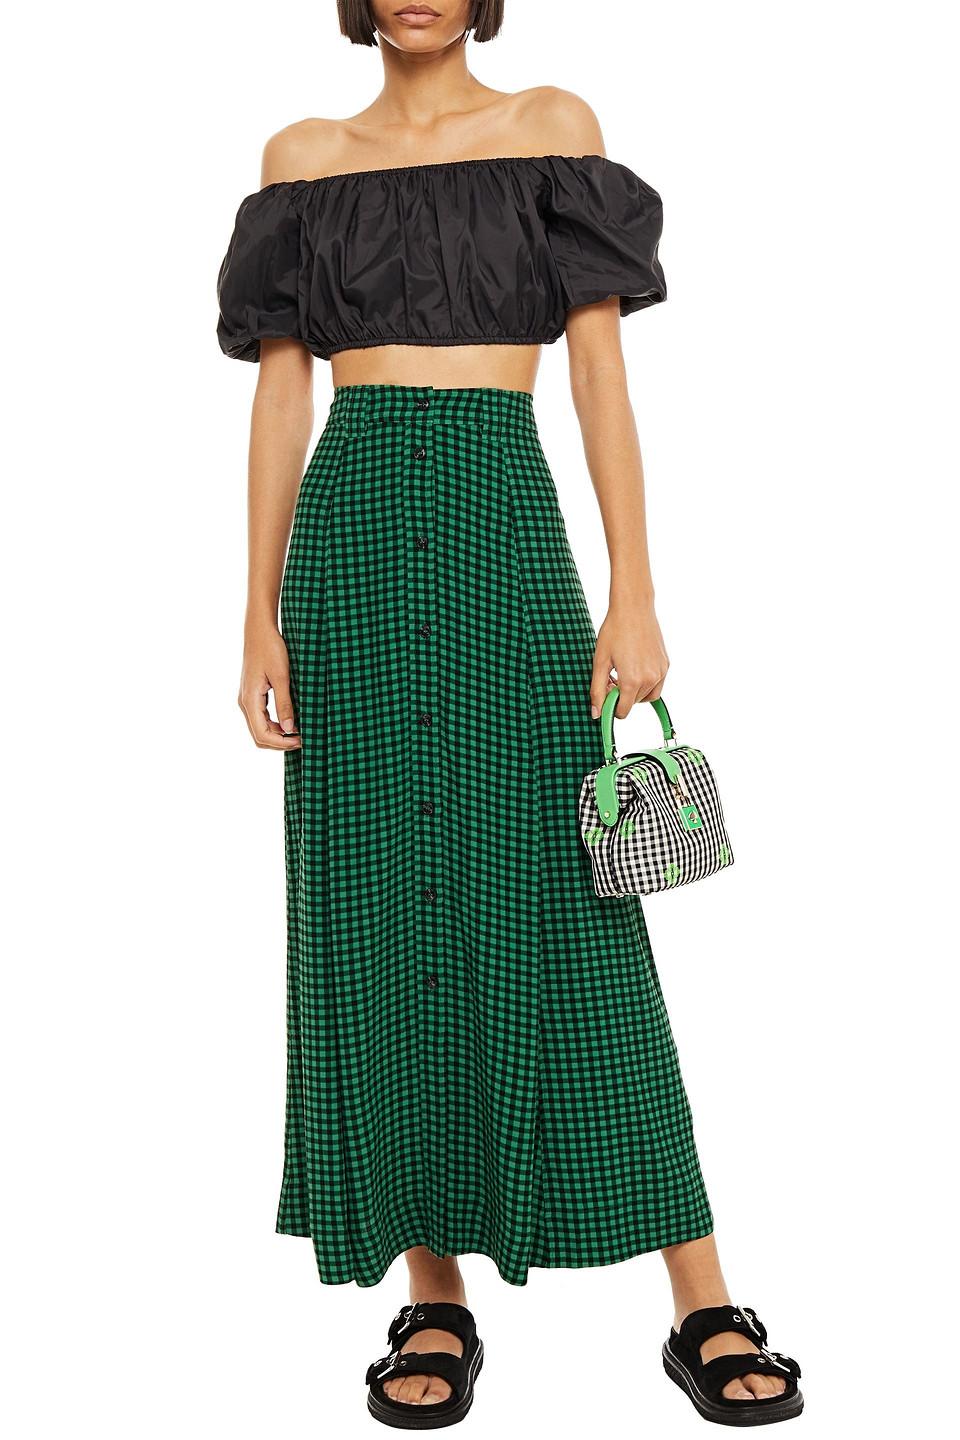 Ganni Gingham Crepe Maxi Skirt in Green | Lyst